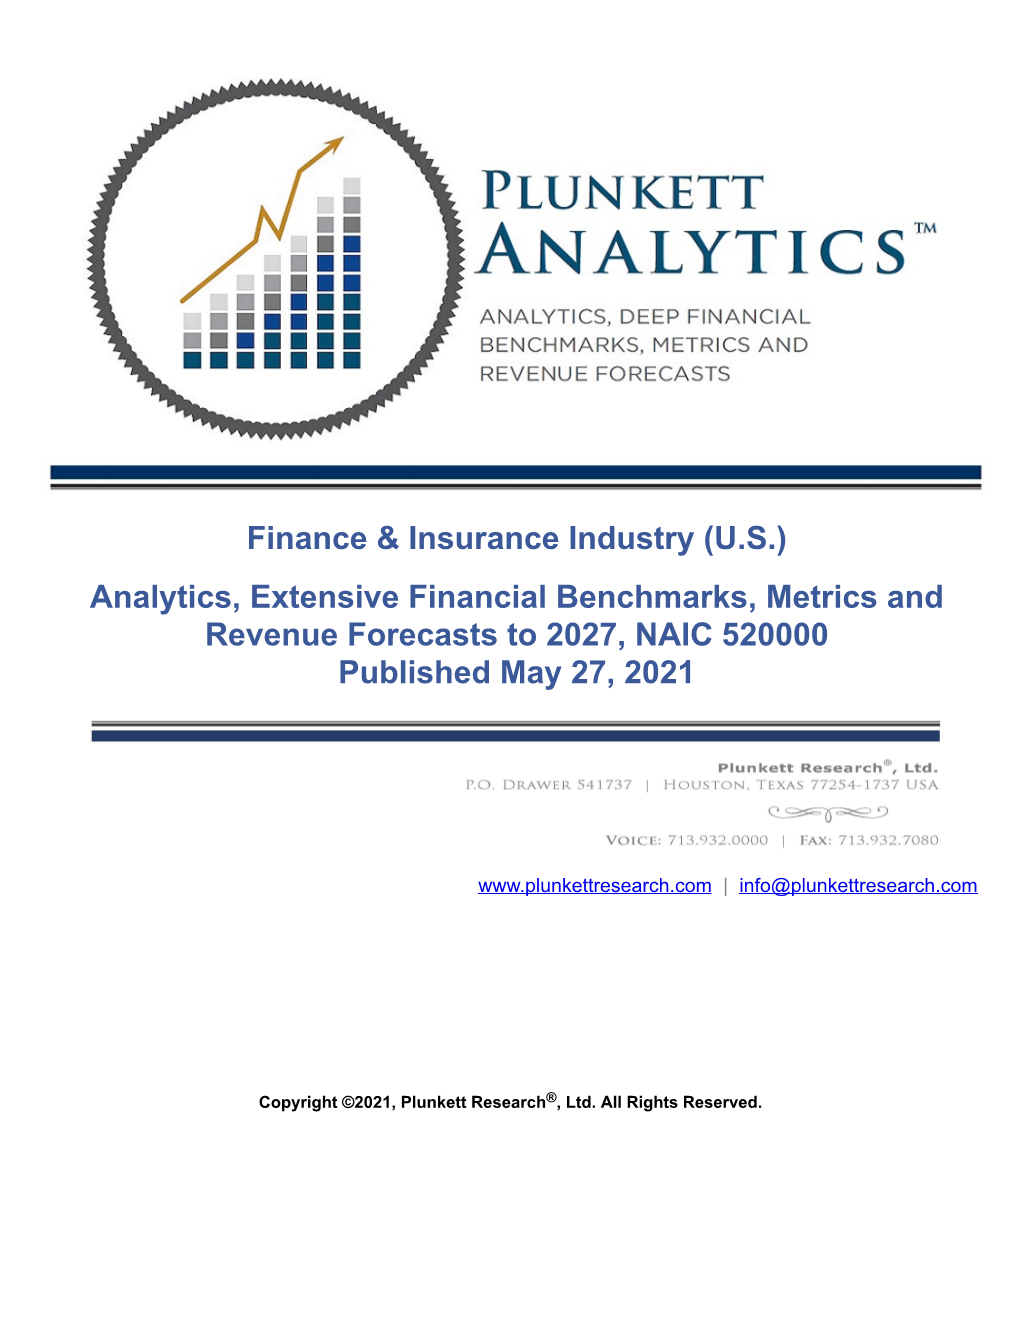 Finance & Insurance Industry (U.S.) Analytics, Extensive Financial